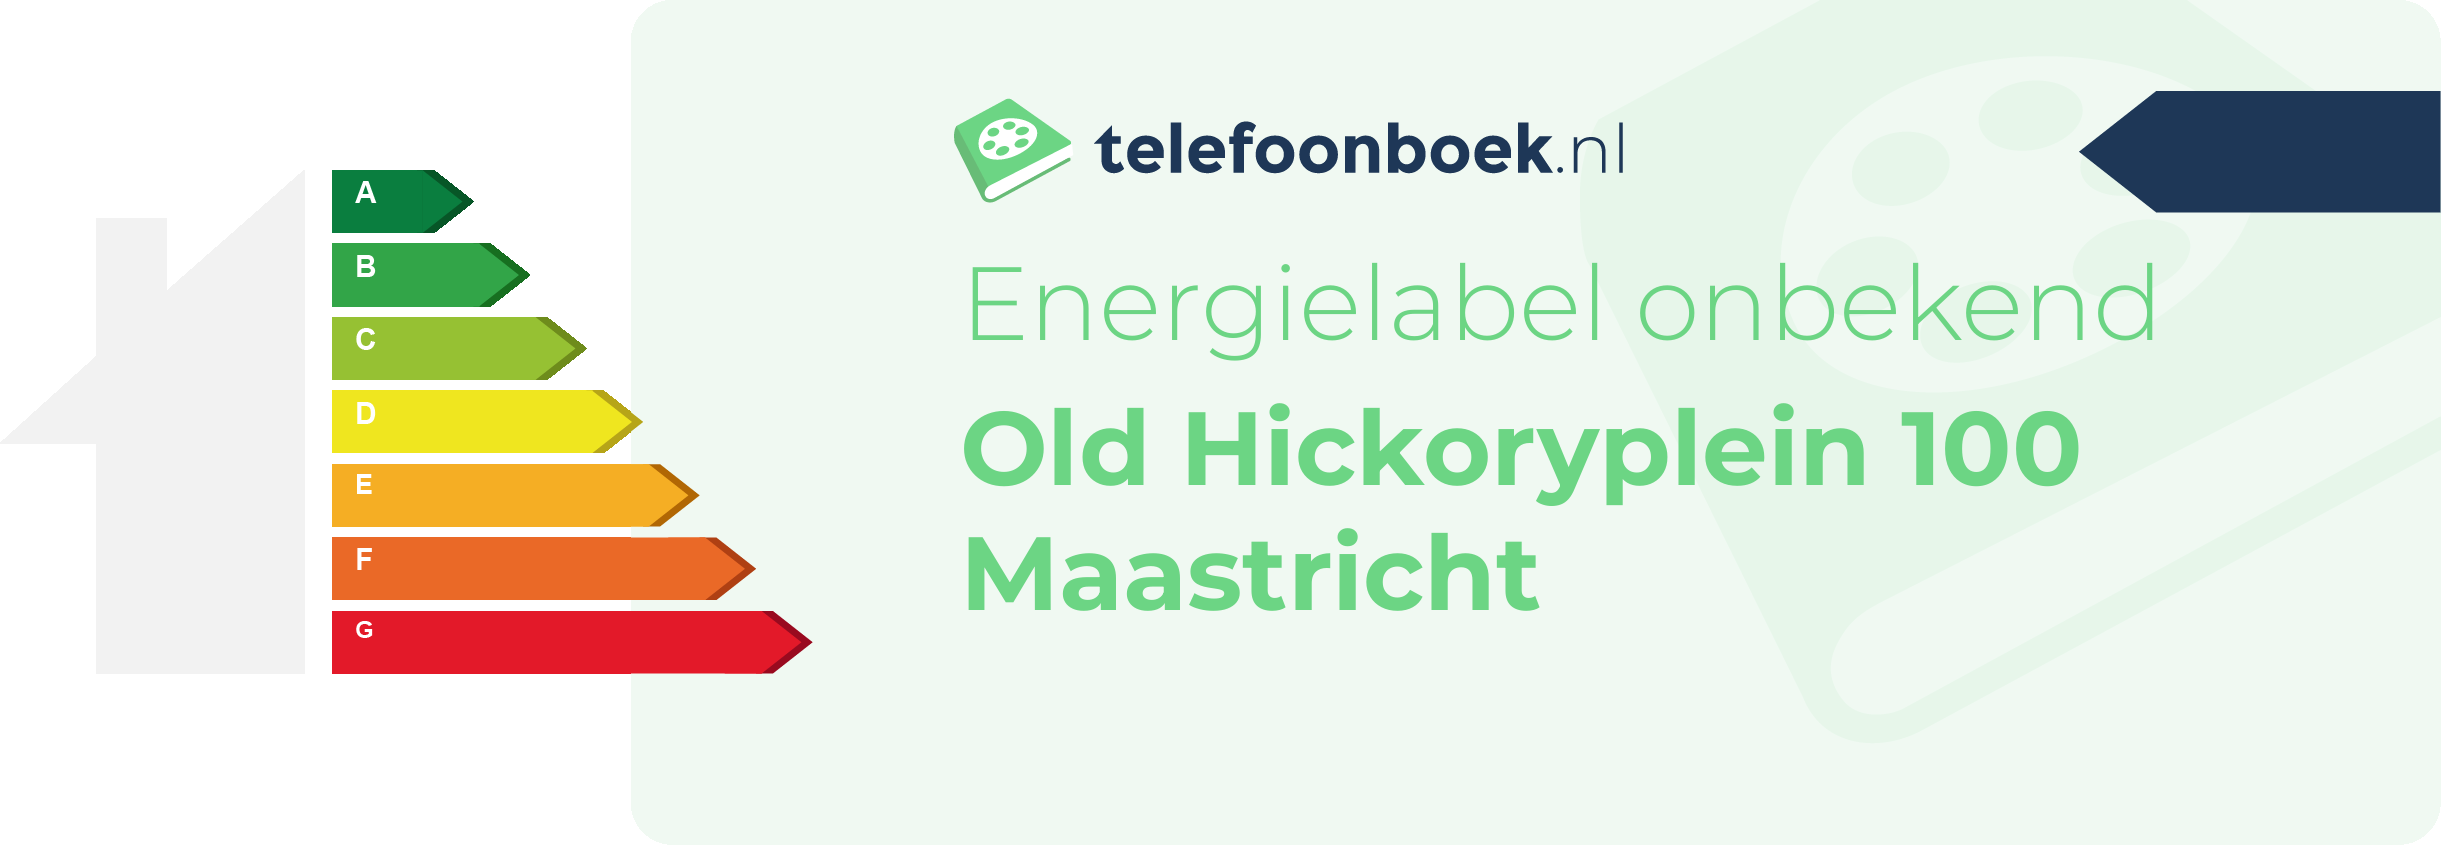 Energielabel Old Hickoryplein 100 Maastricht